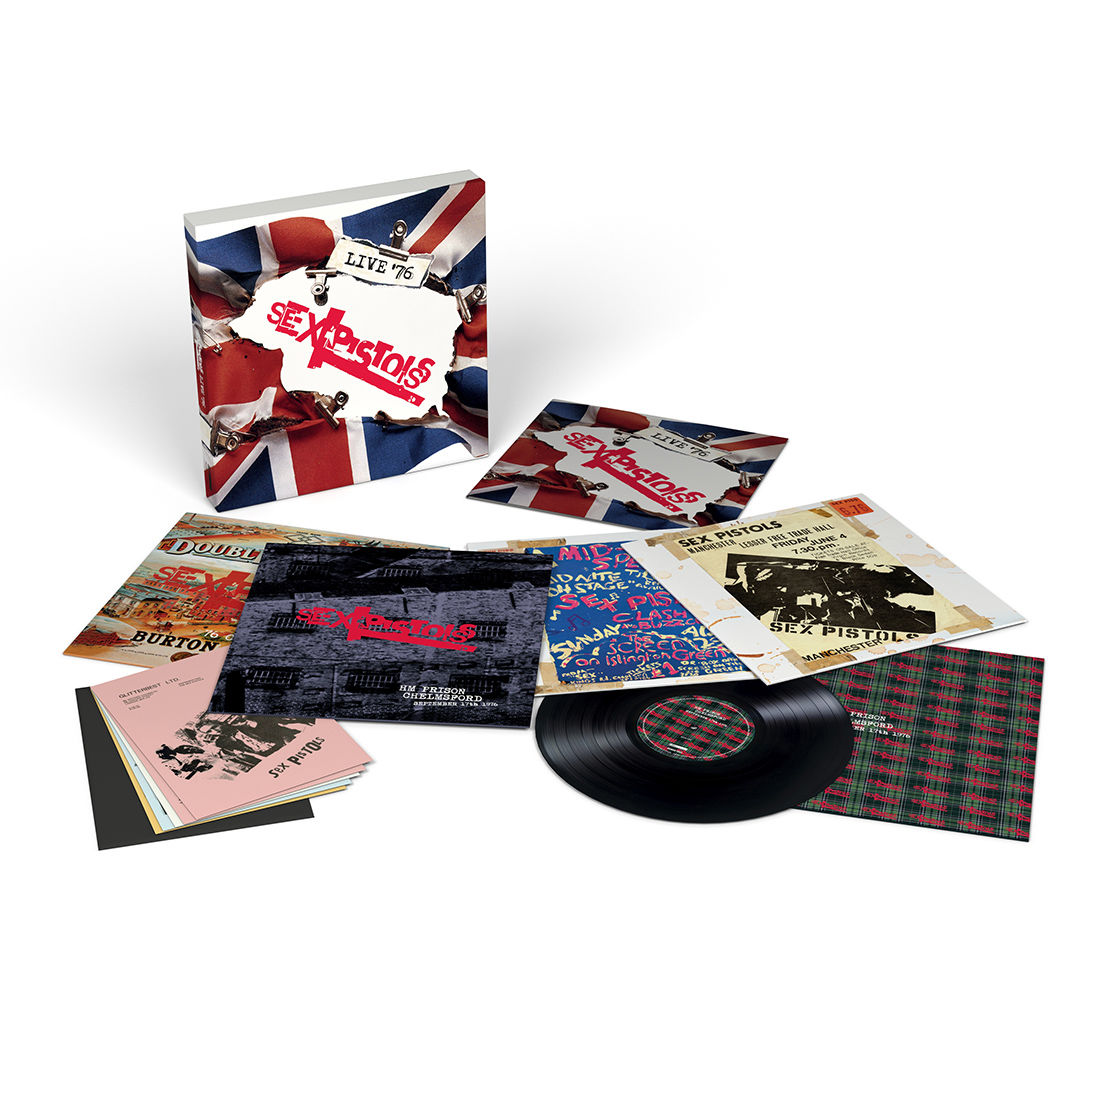 Take a look inside the Sex Pistols – Live ’76 box set!